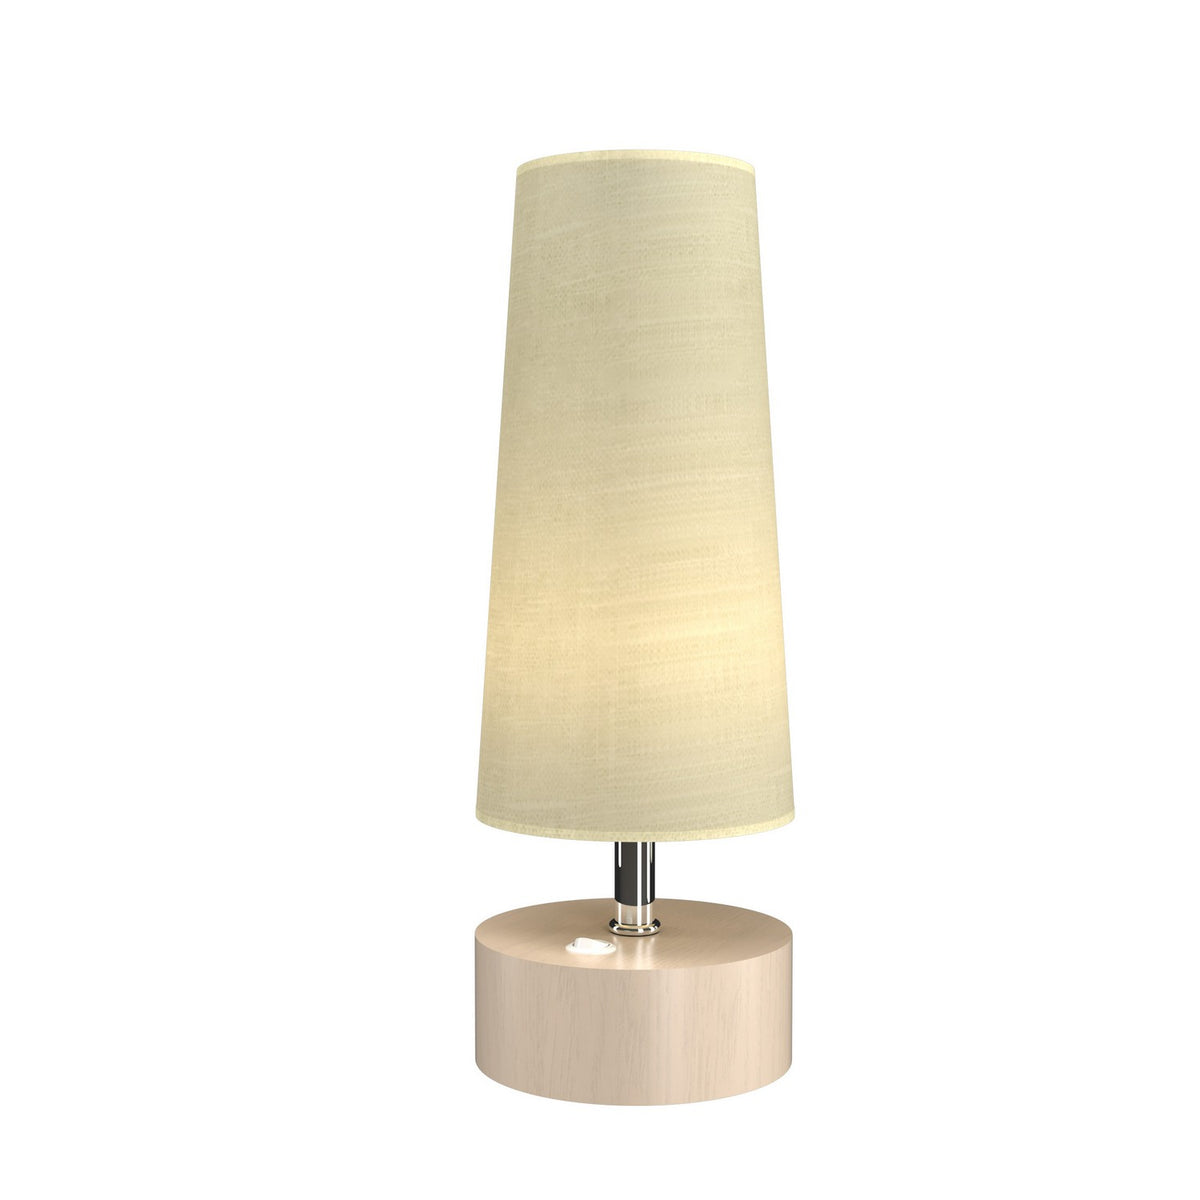 Accord Lighting - 7101.48 - LED Table Lamp - Clean - Organic Cappuccino